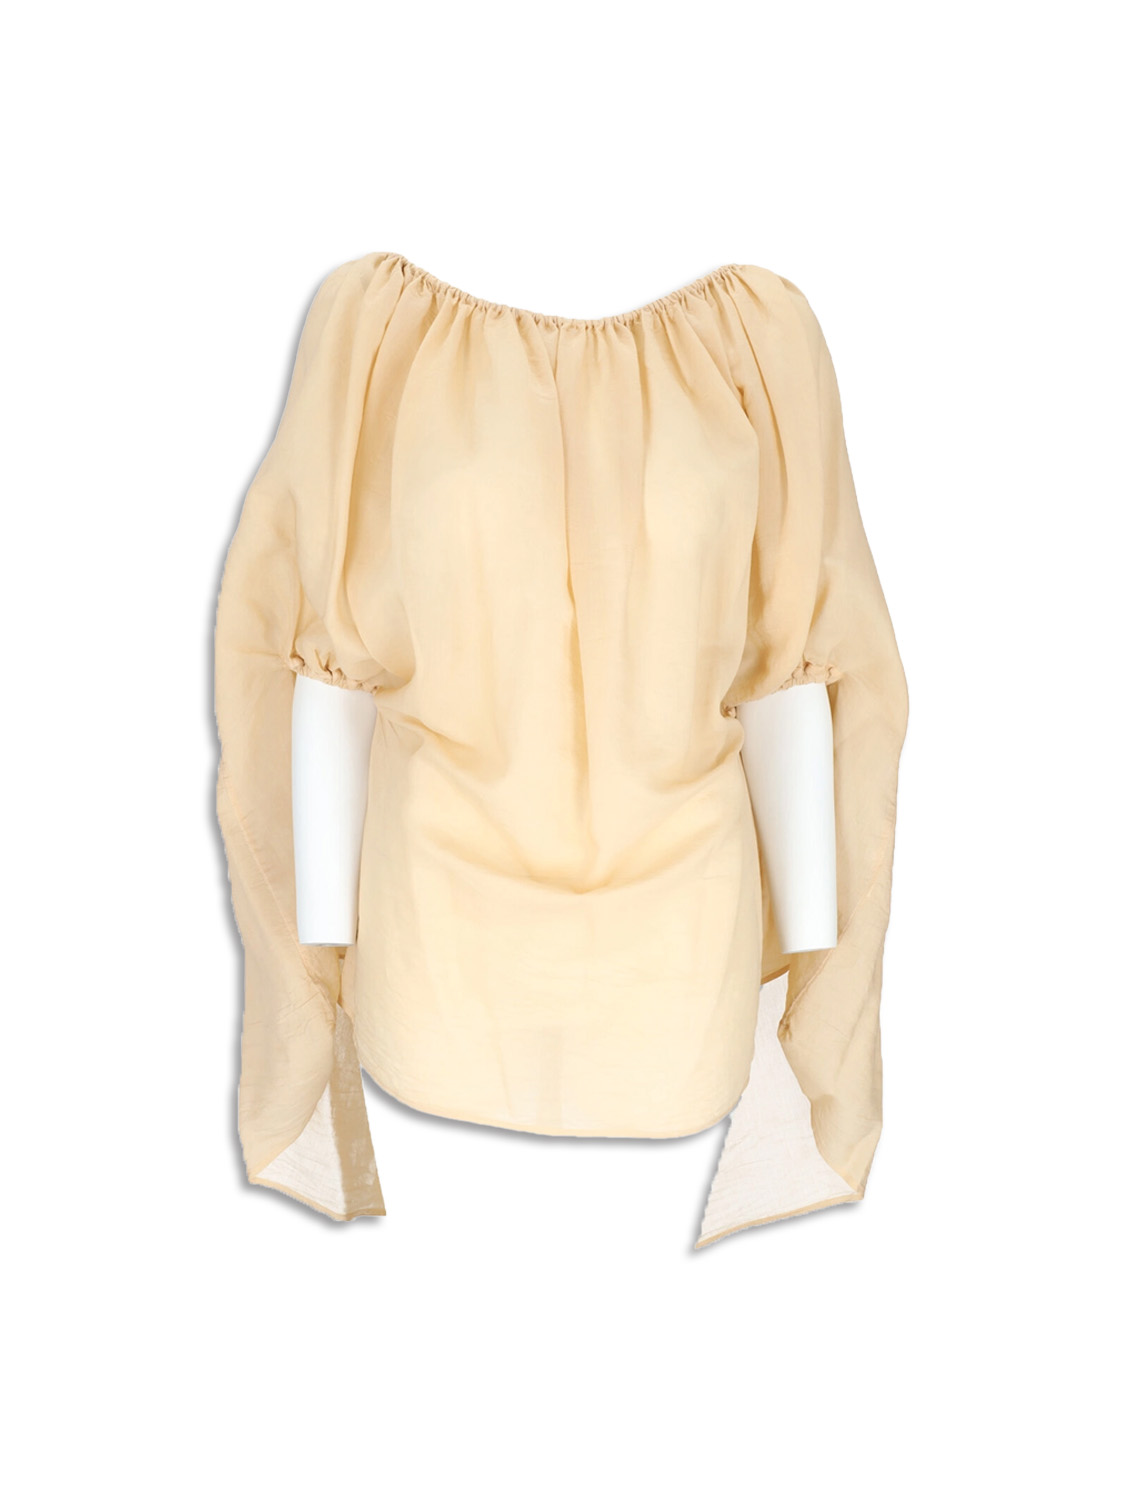 Slip on blouse Ava - blouse with carmen neckline in cotton